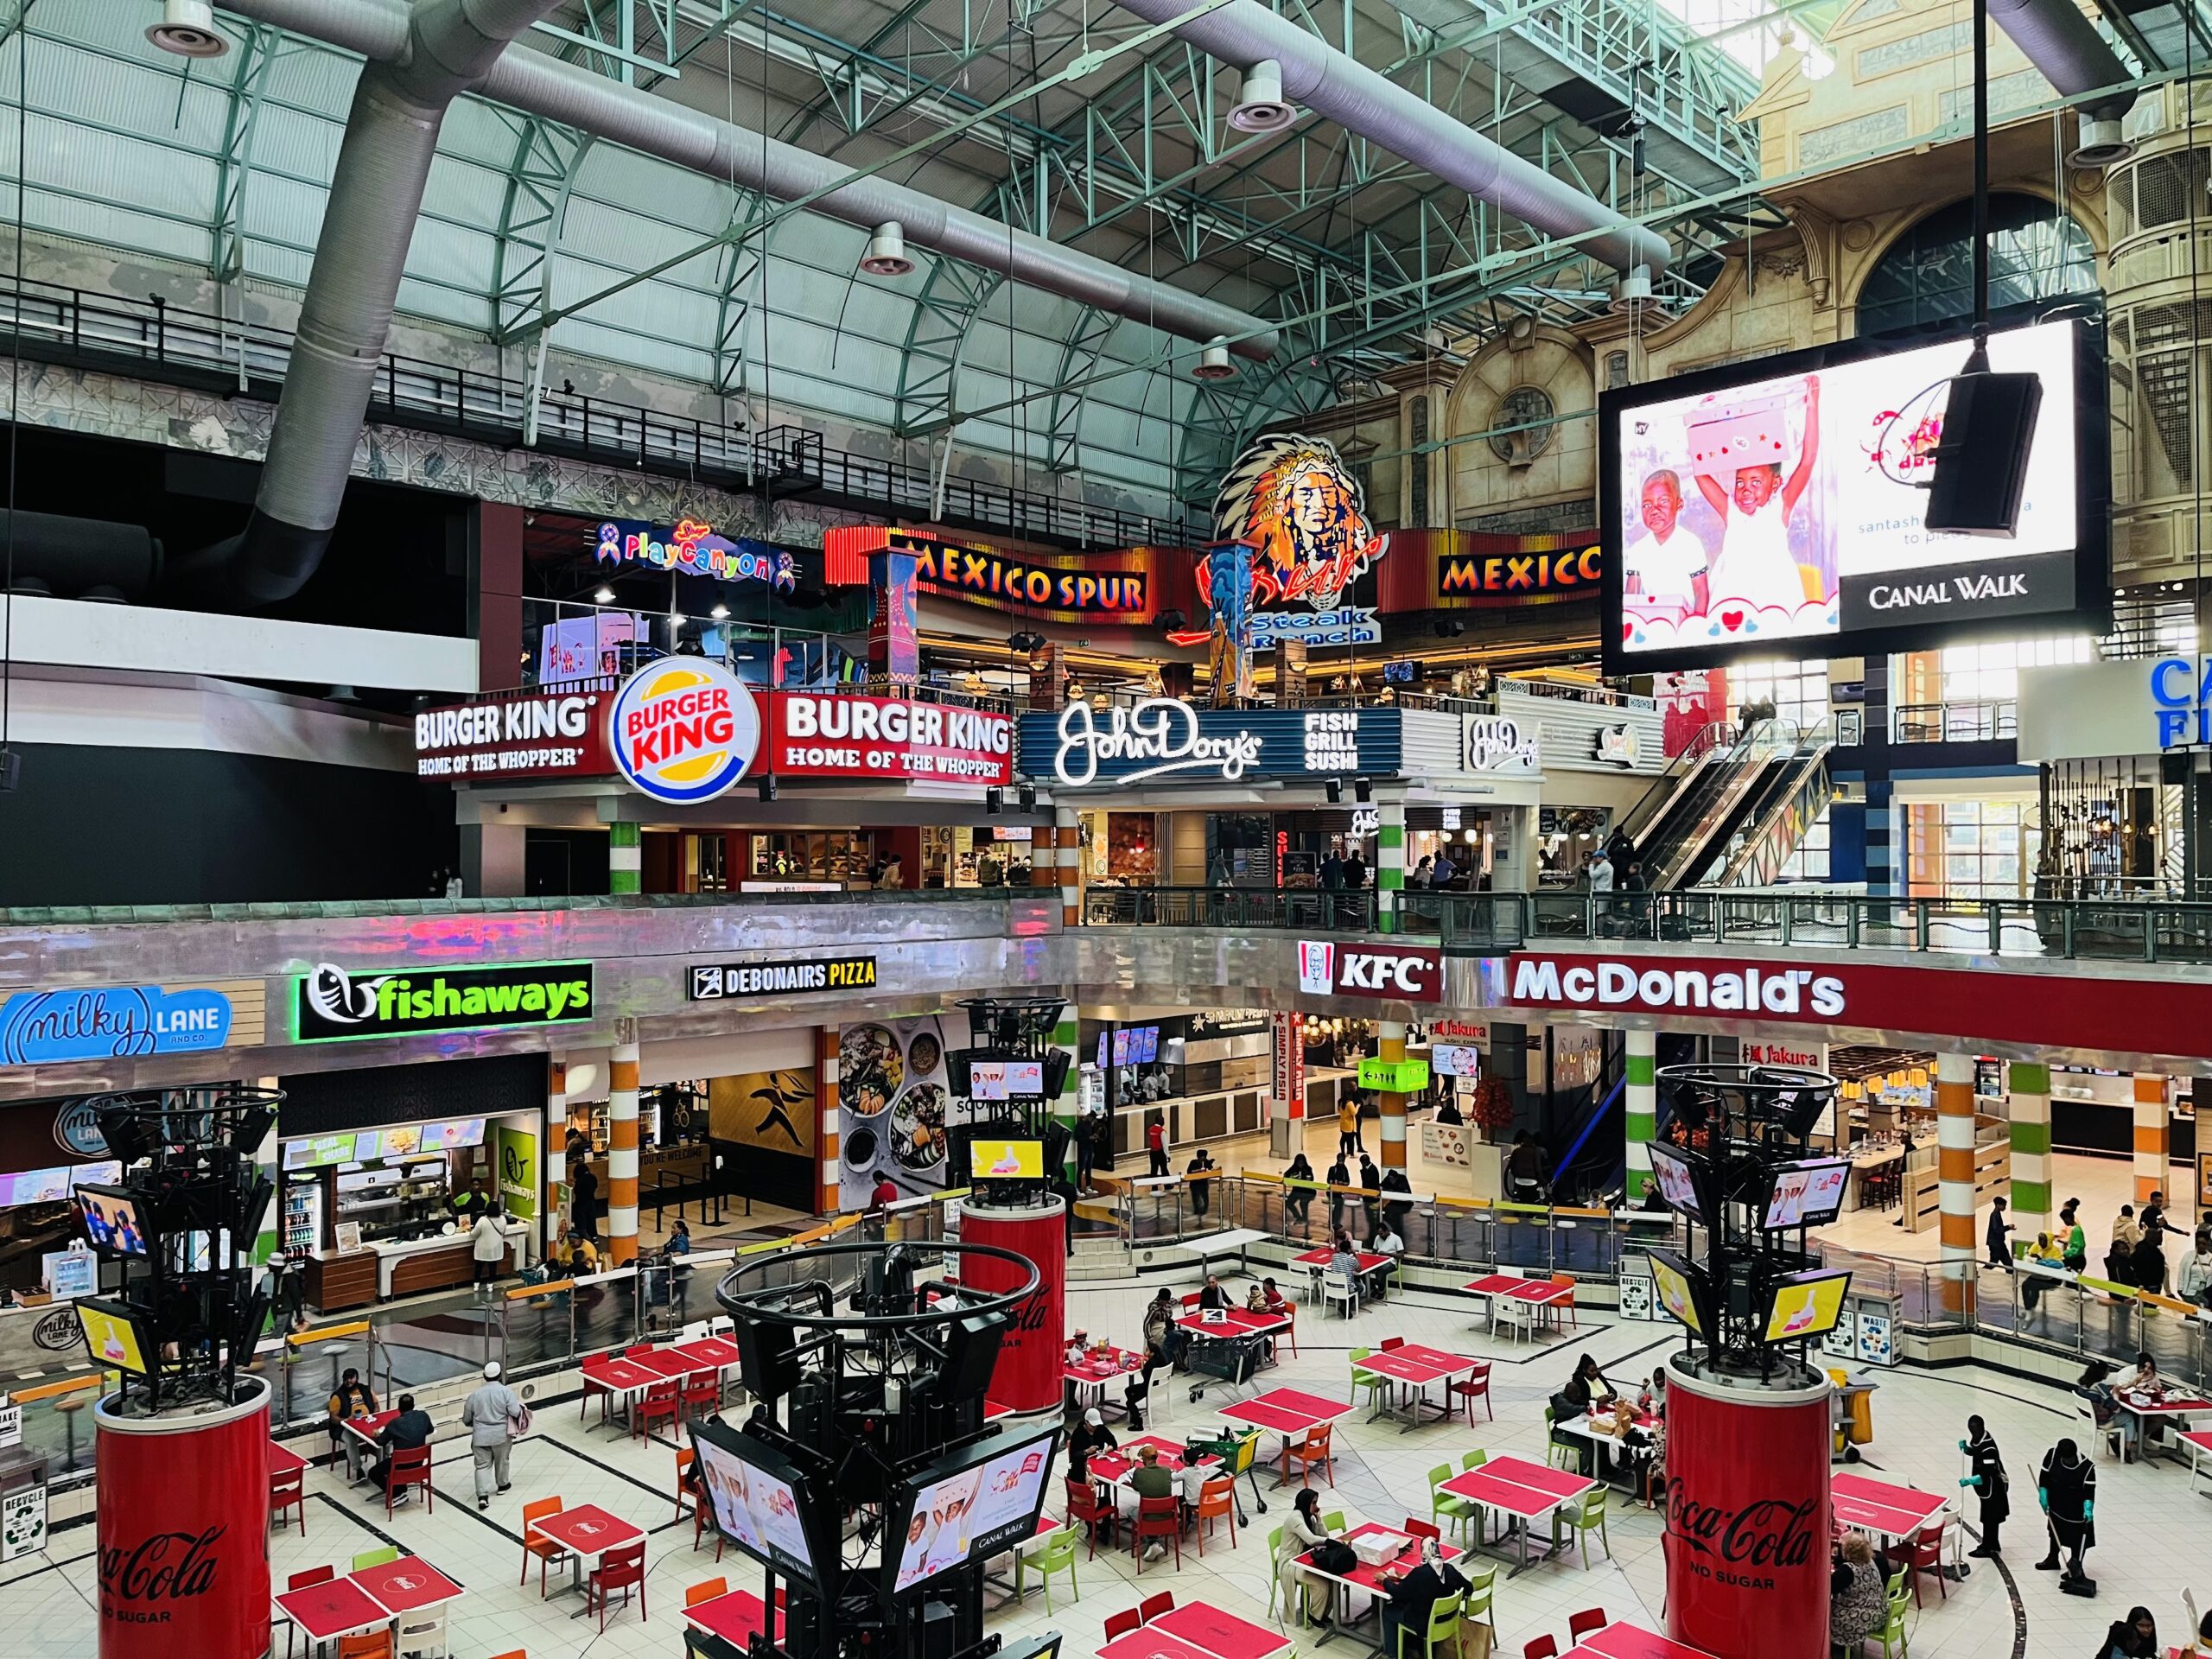 Mexico Spur Shopping Mall